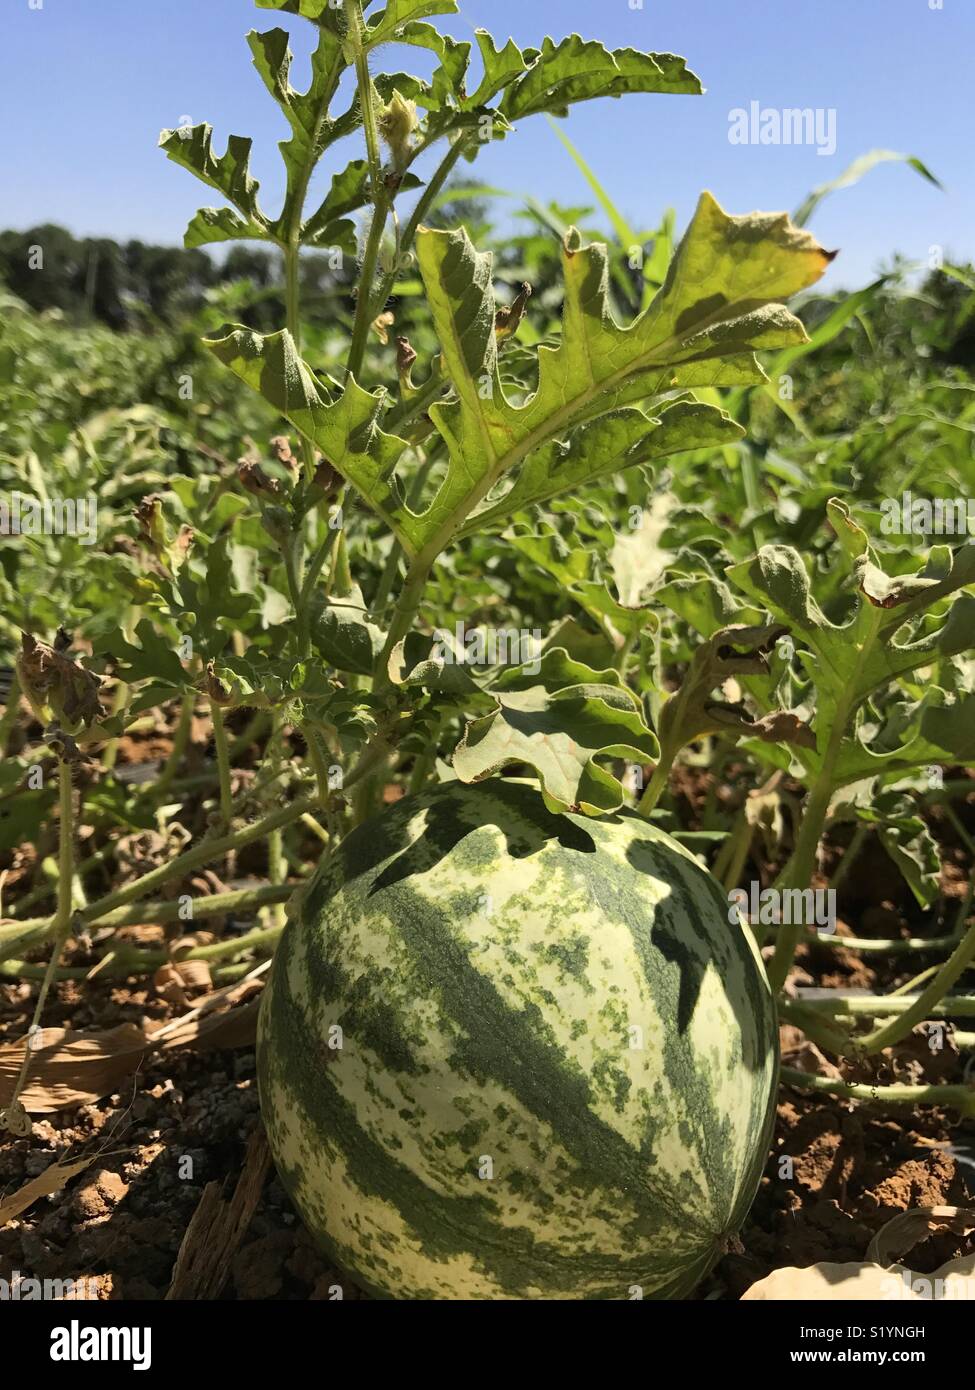 Baby Watermelon growing Stock Photo